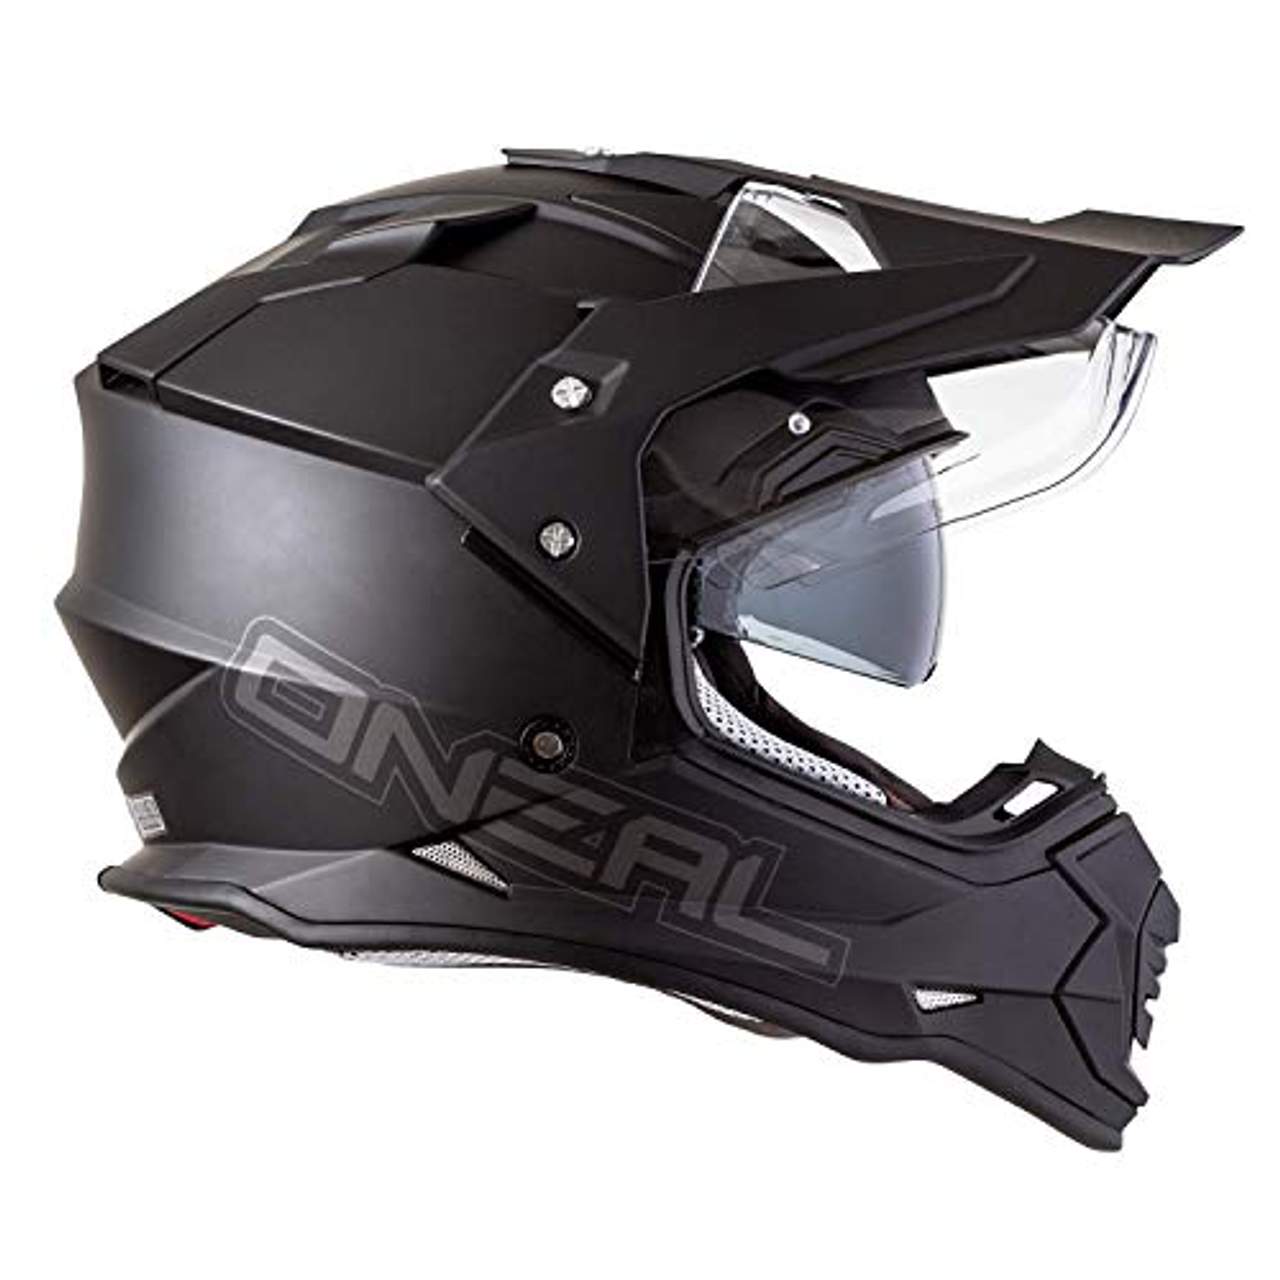 O'NEAL Sierra II Adventure Enduro MX Motorrad Helm Flat schwarz